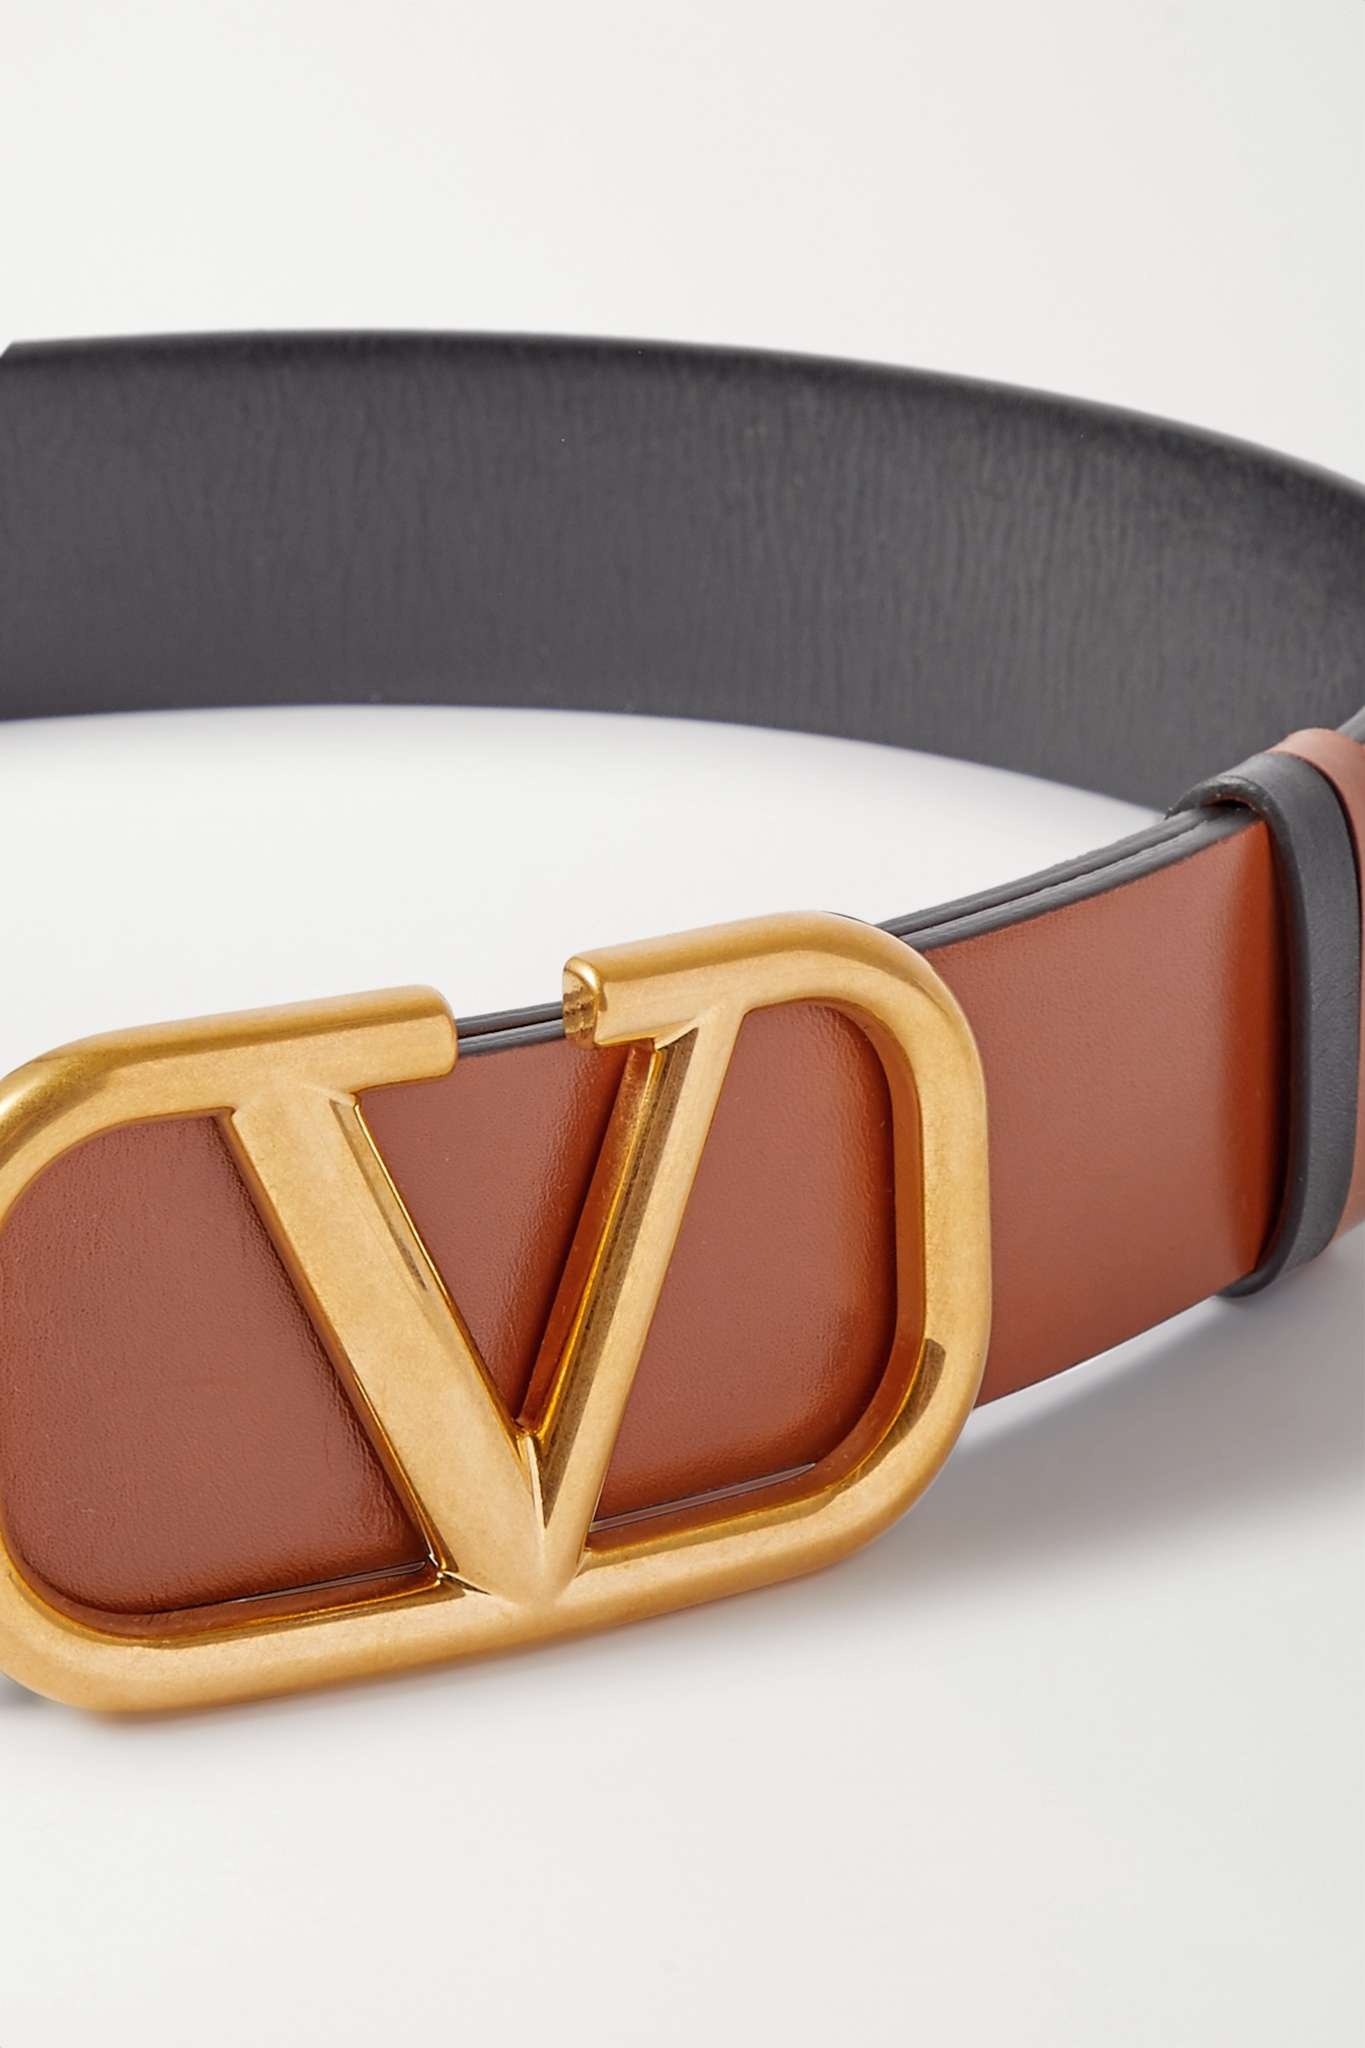 VLOGO reversible leather belt - 3